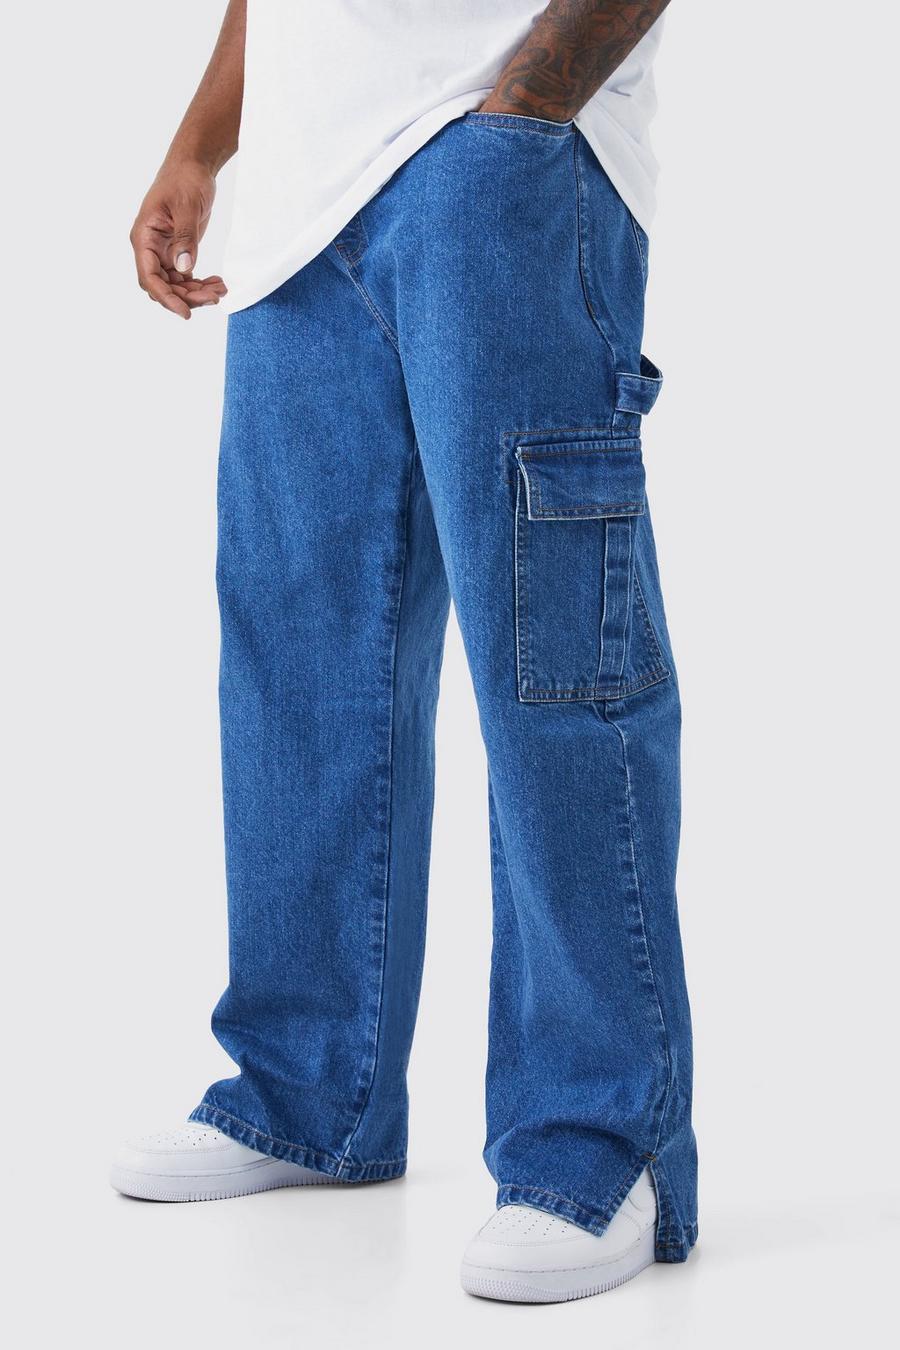 Jeans Plus Size in denim rigido rilassato con spacco sul fondo, Antique blue image number 1